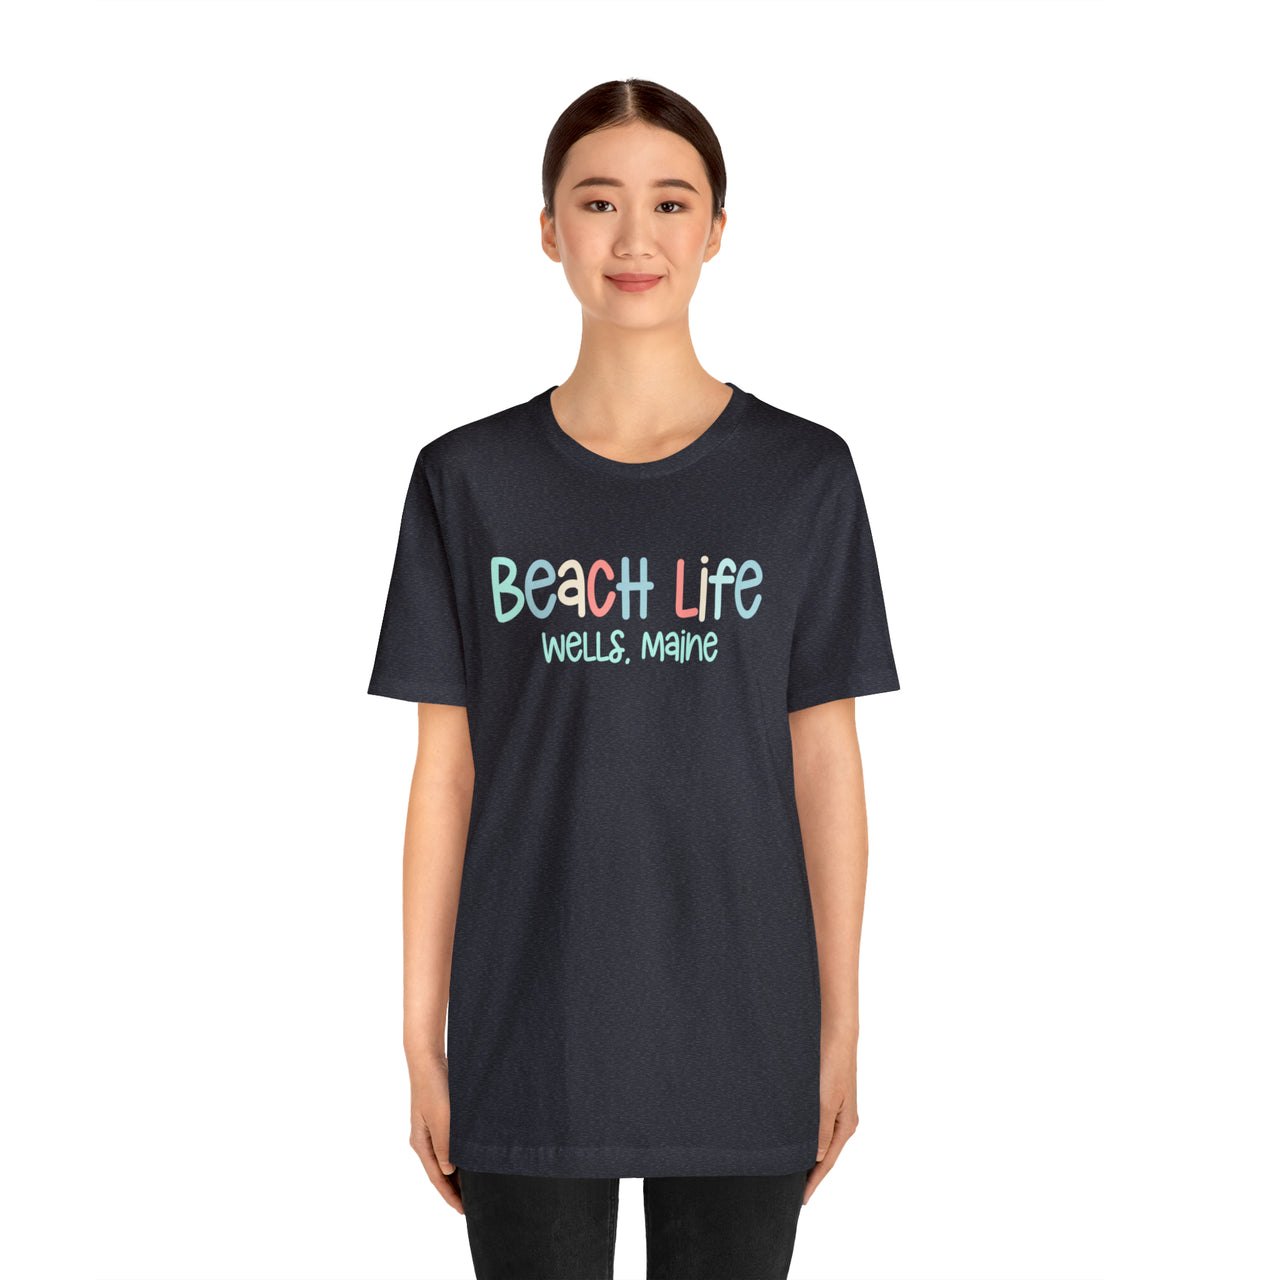 Beach Life Weekend Tee Shirt, Personalized